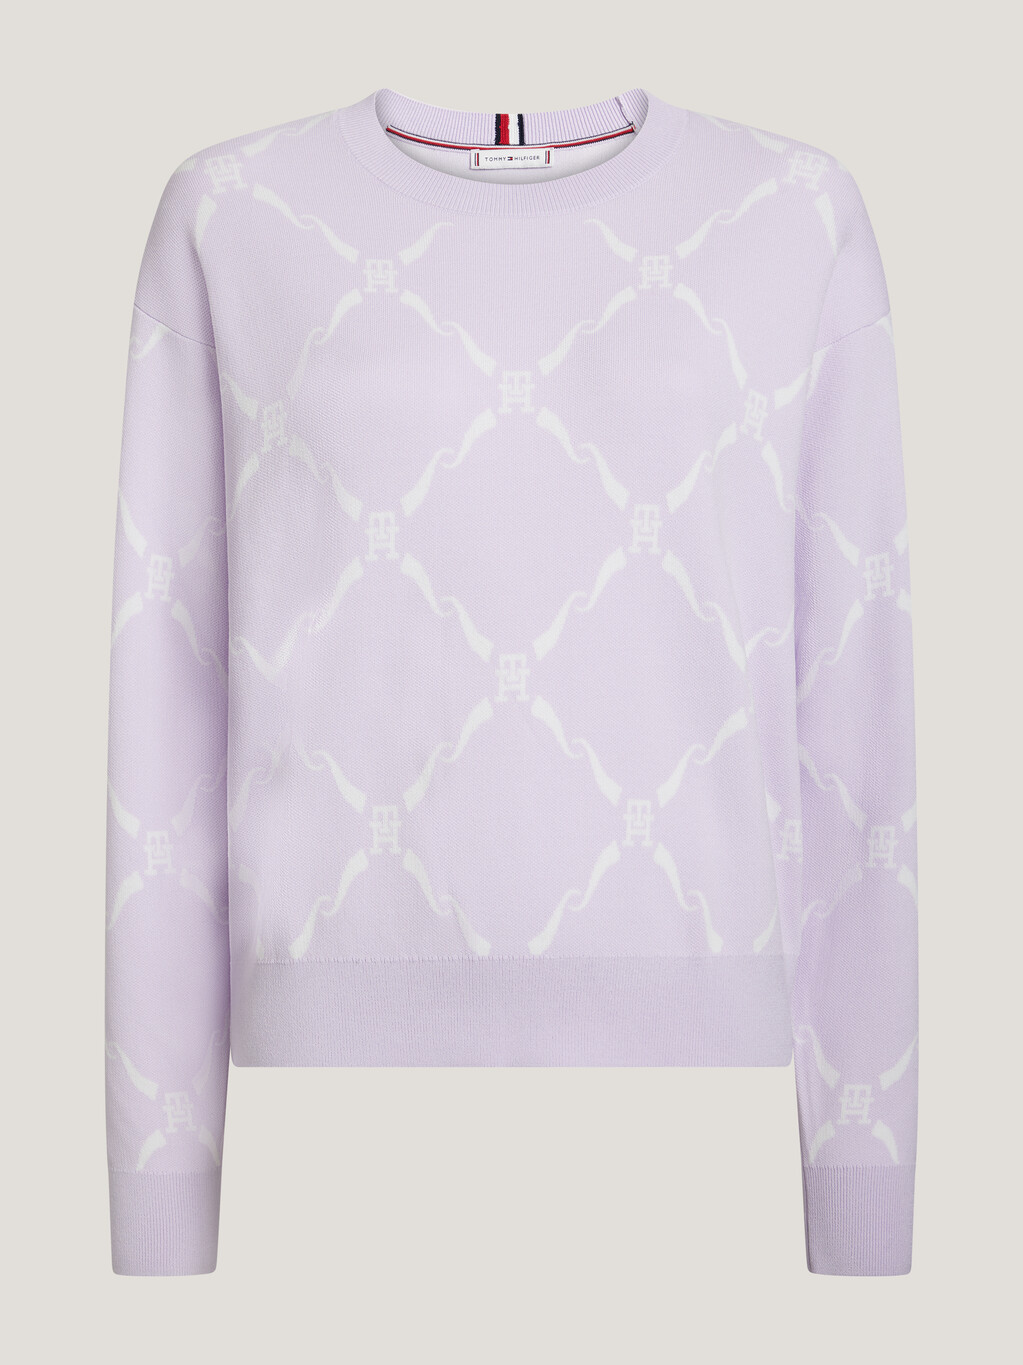 Monogram Diamond Jacquard Sweater, Imd Aop Lilac Ice New, hi-res